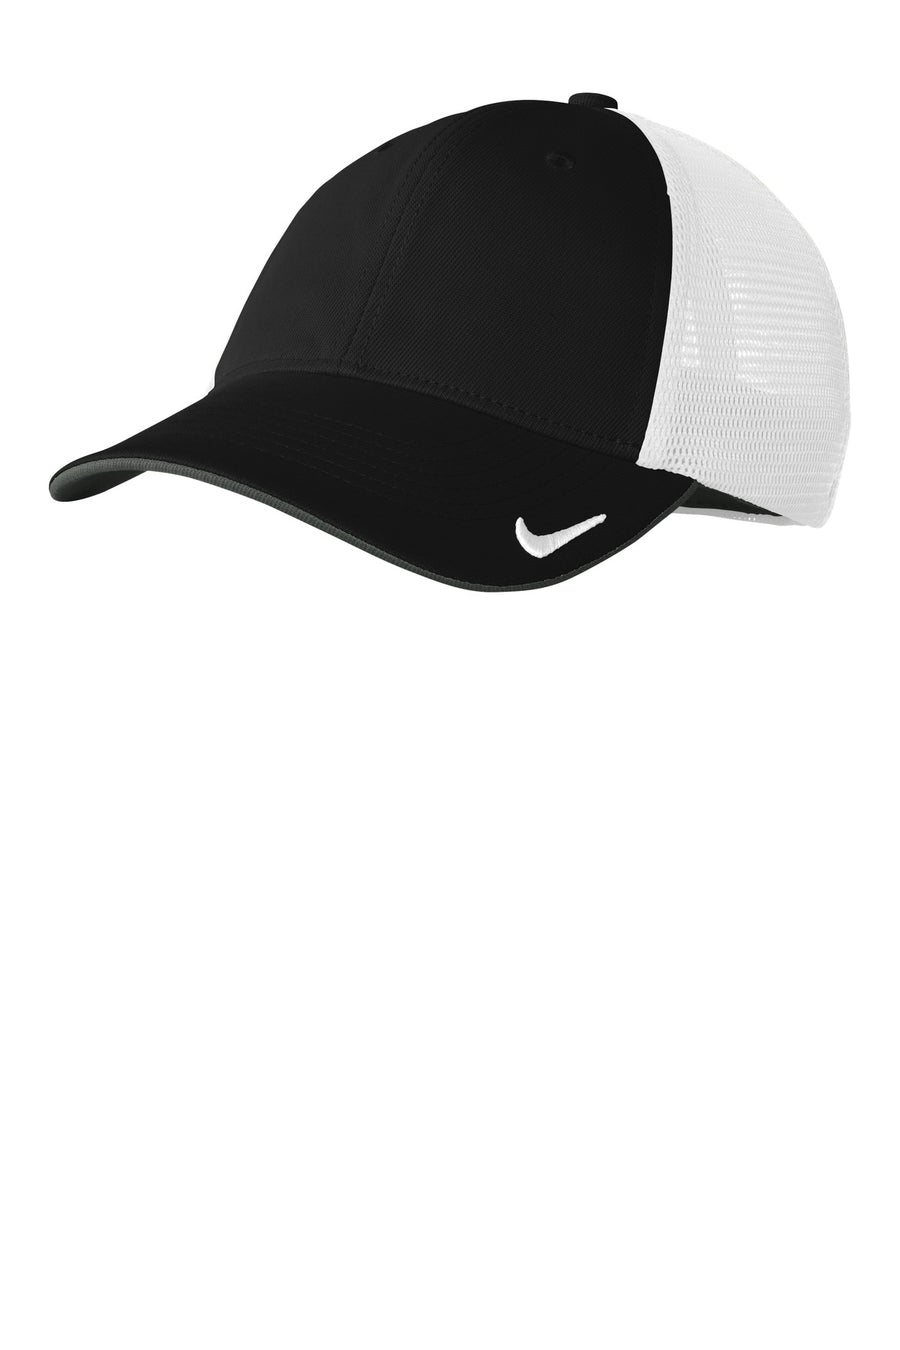 Nike Dri-FIT Mesh Back Cap.